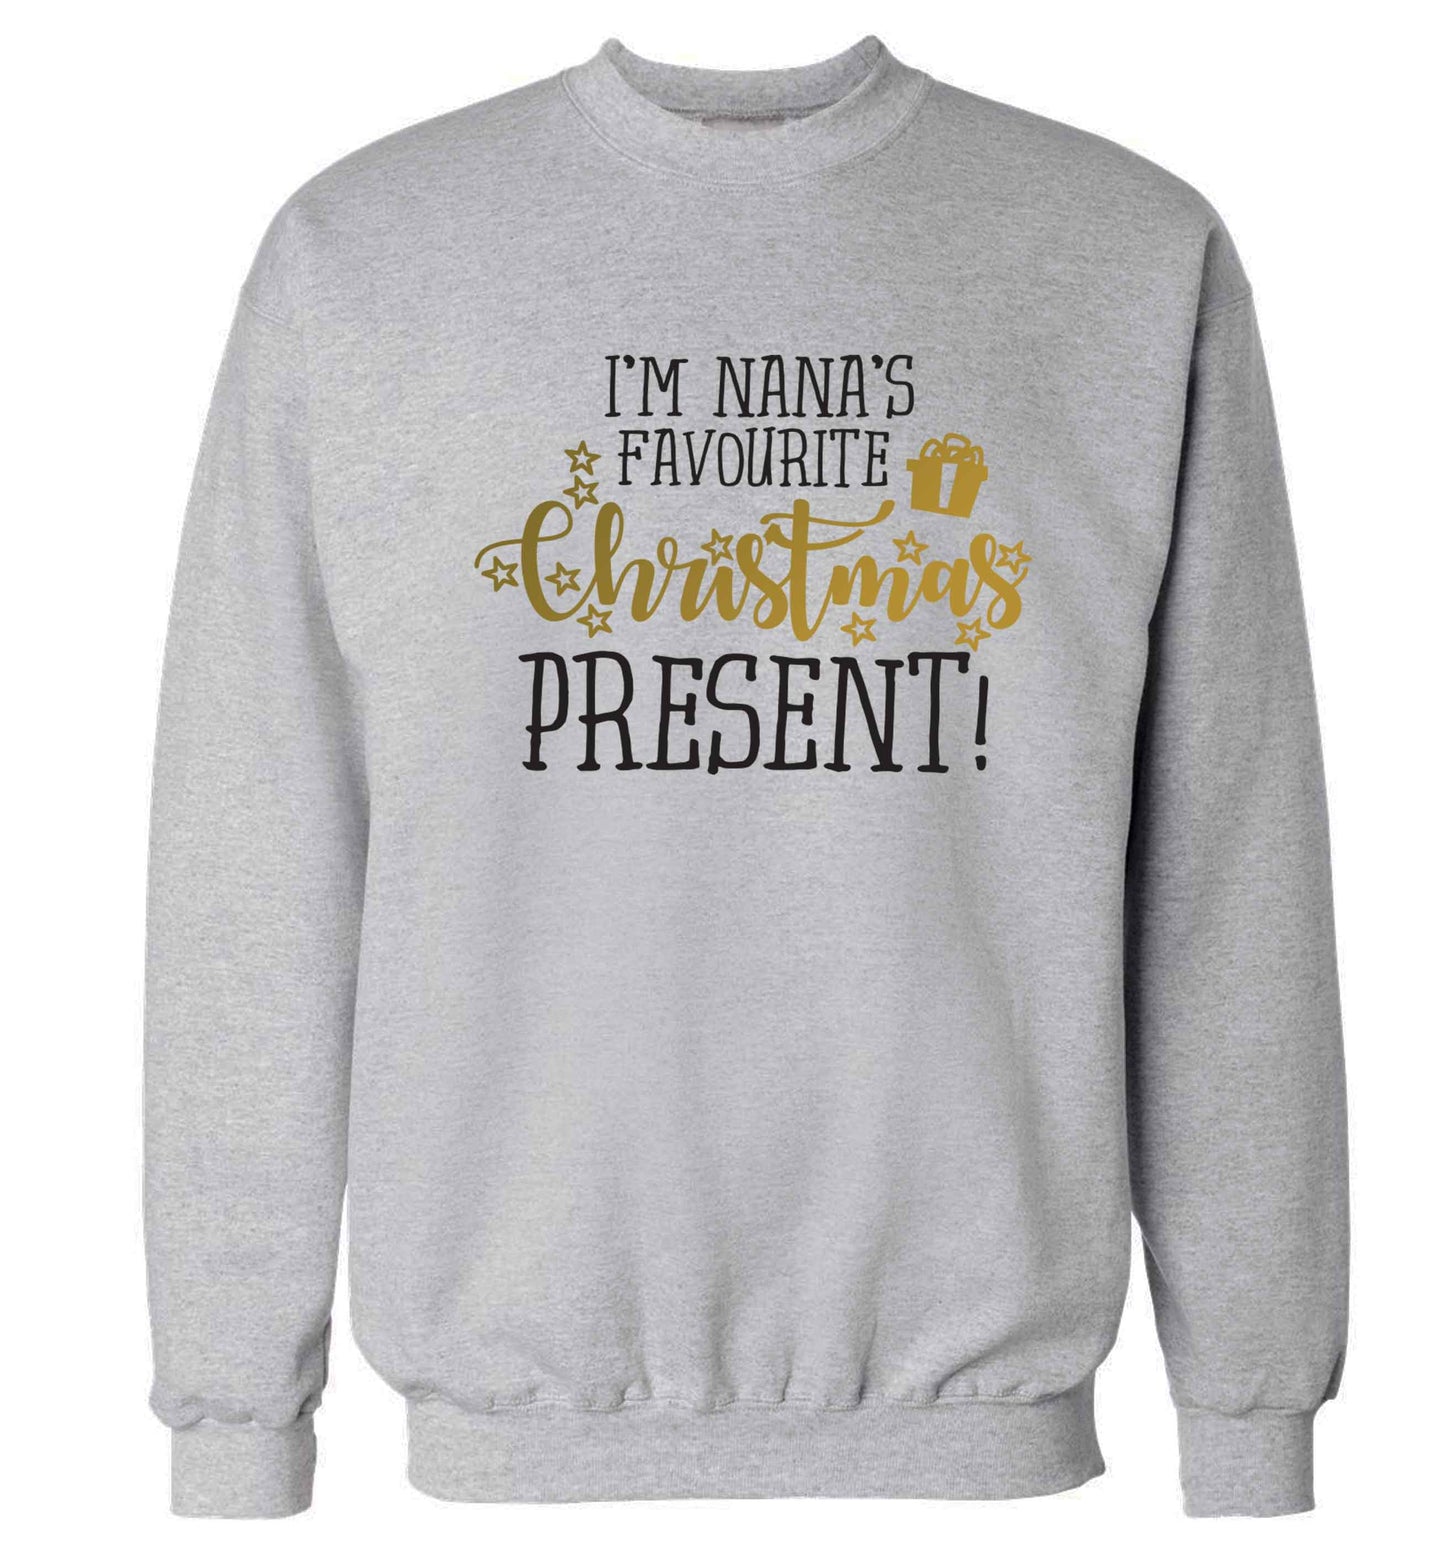 Nana's favourite Christmas present Adult's unisex grey Sweater 2XL